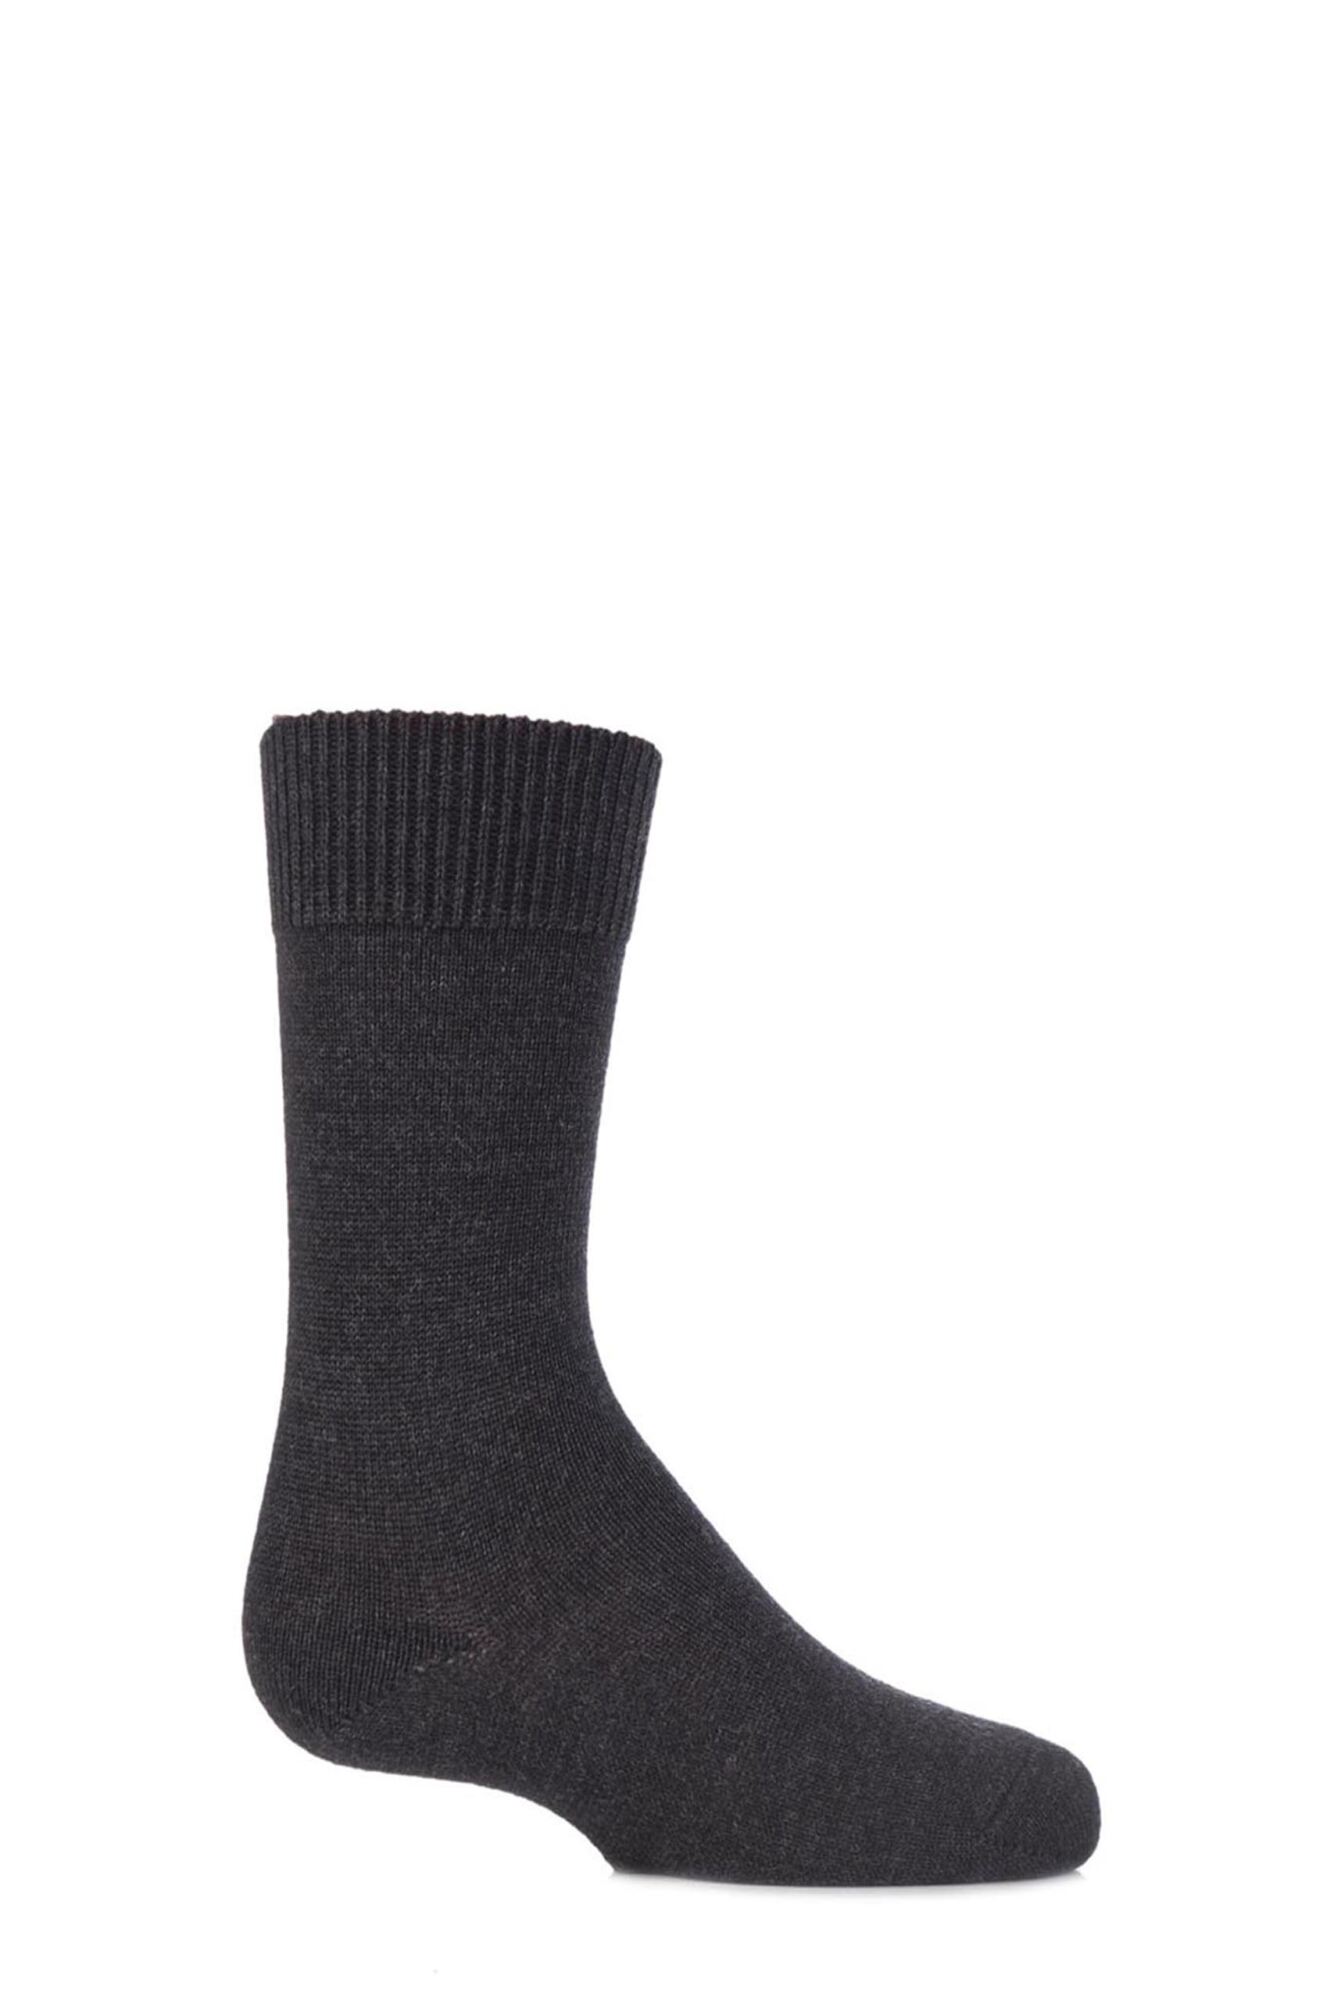 1 Pair Comfort Wool Plain Socks Kids Unisex - Falke